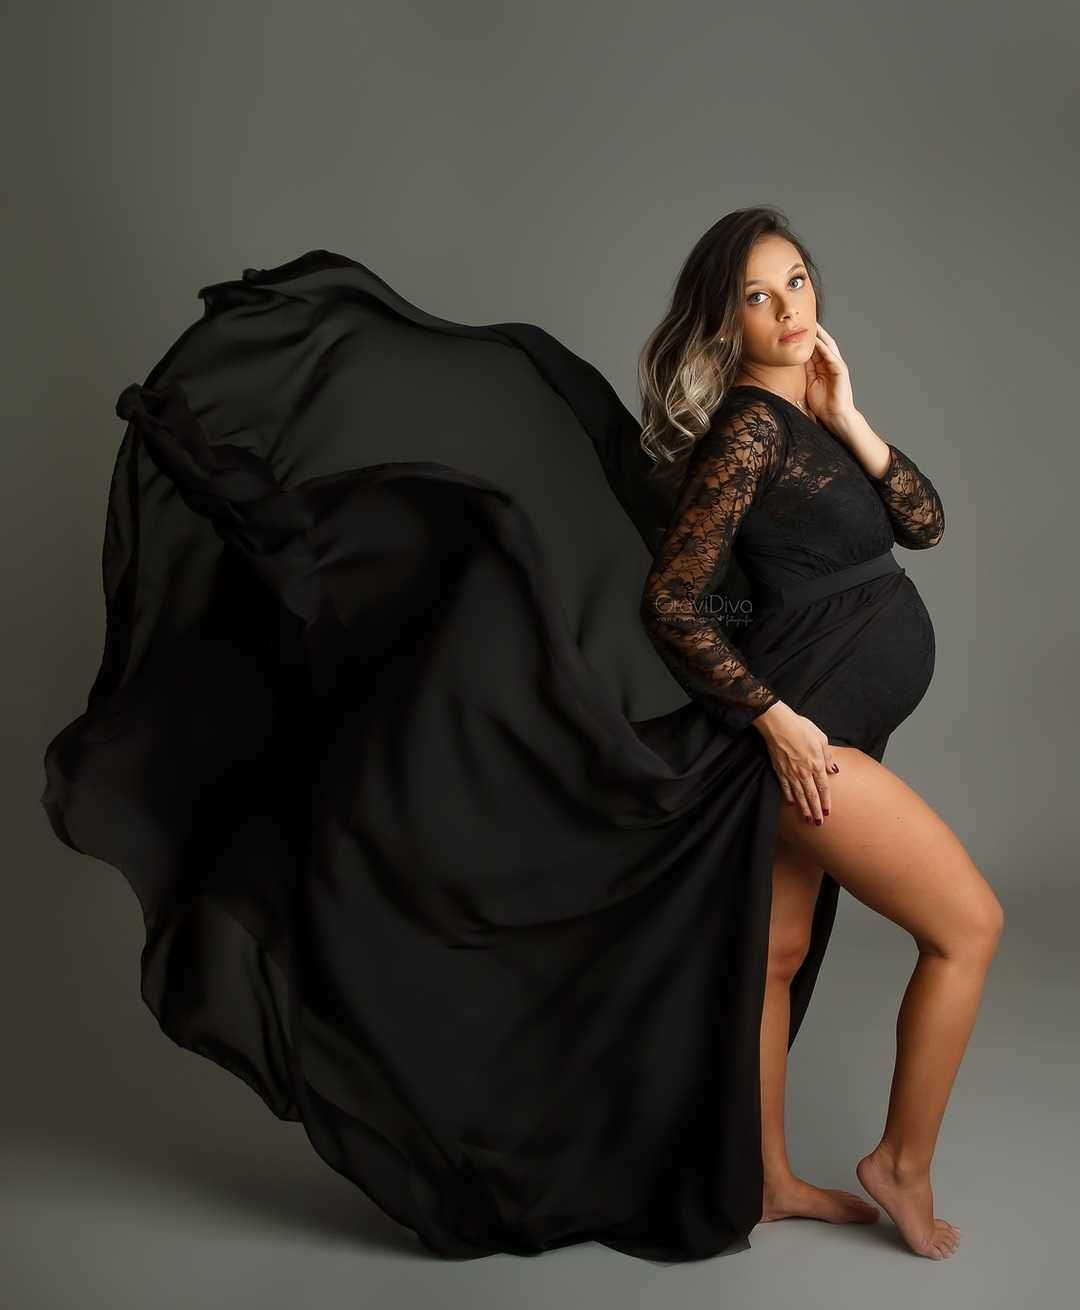 Vestido sessão fotográfica grávida